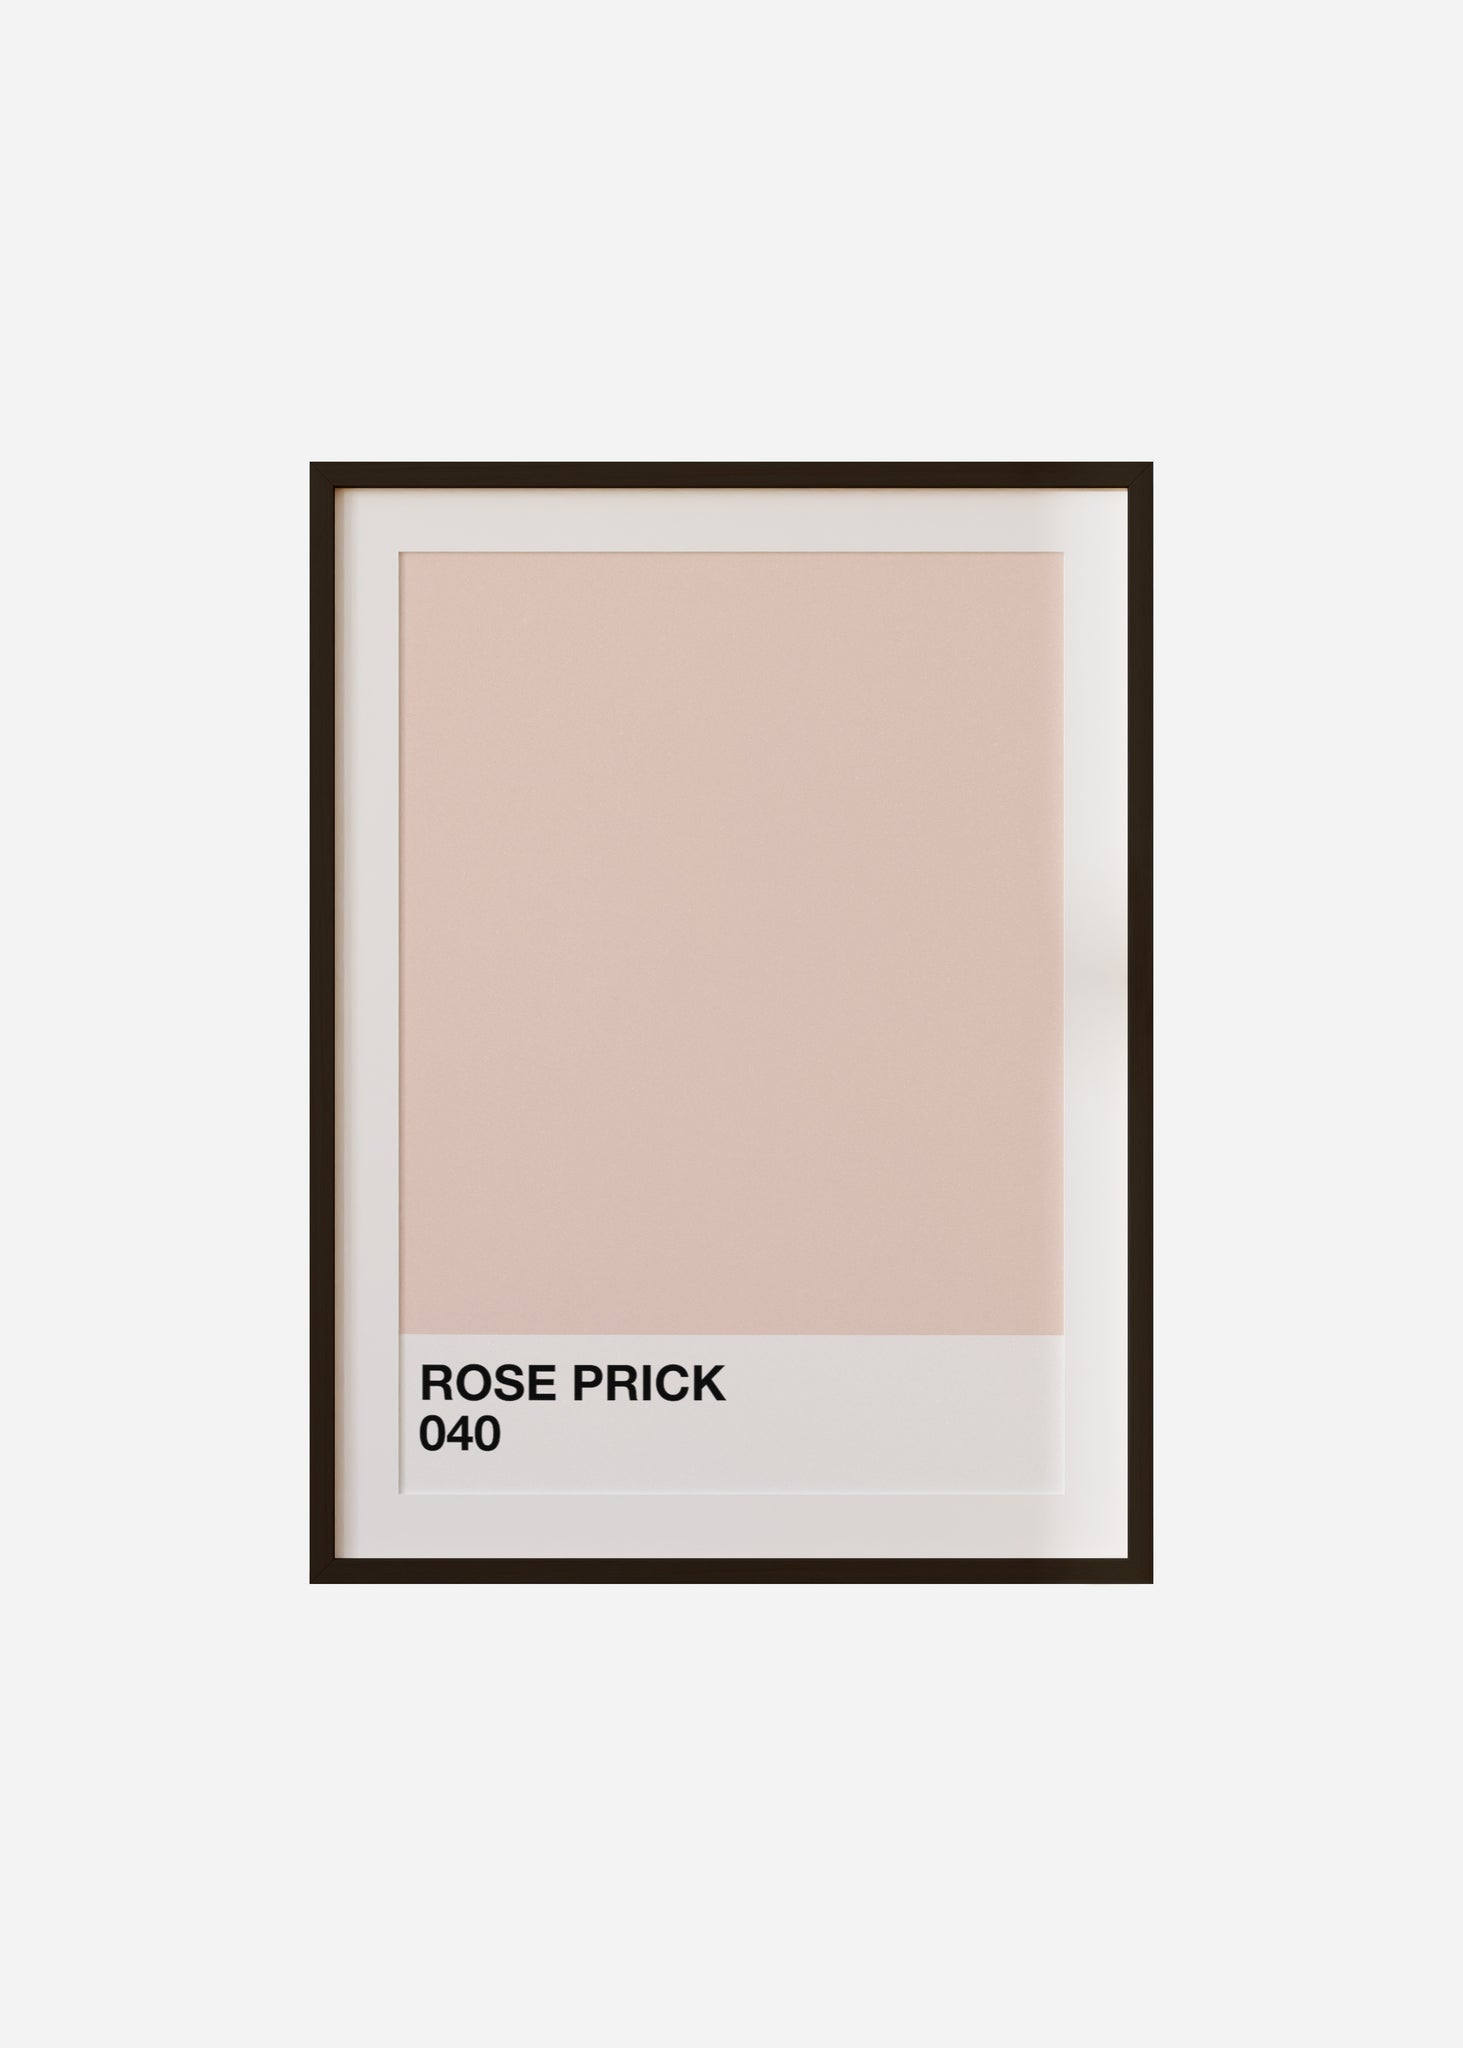 rose prick Framed & Mounted Print